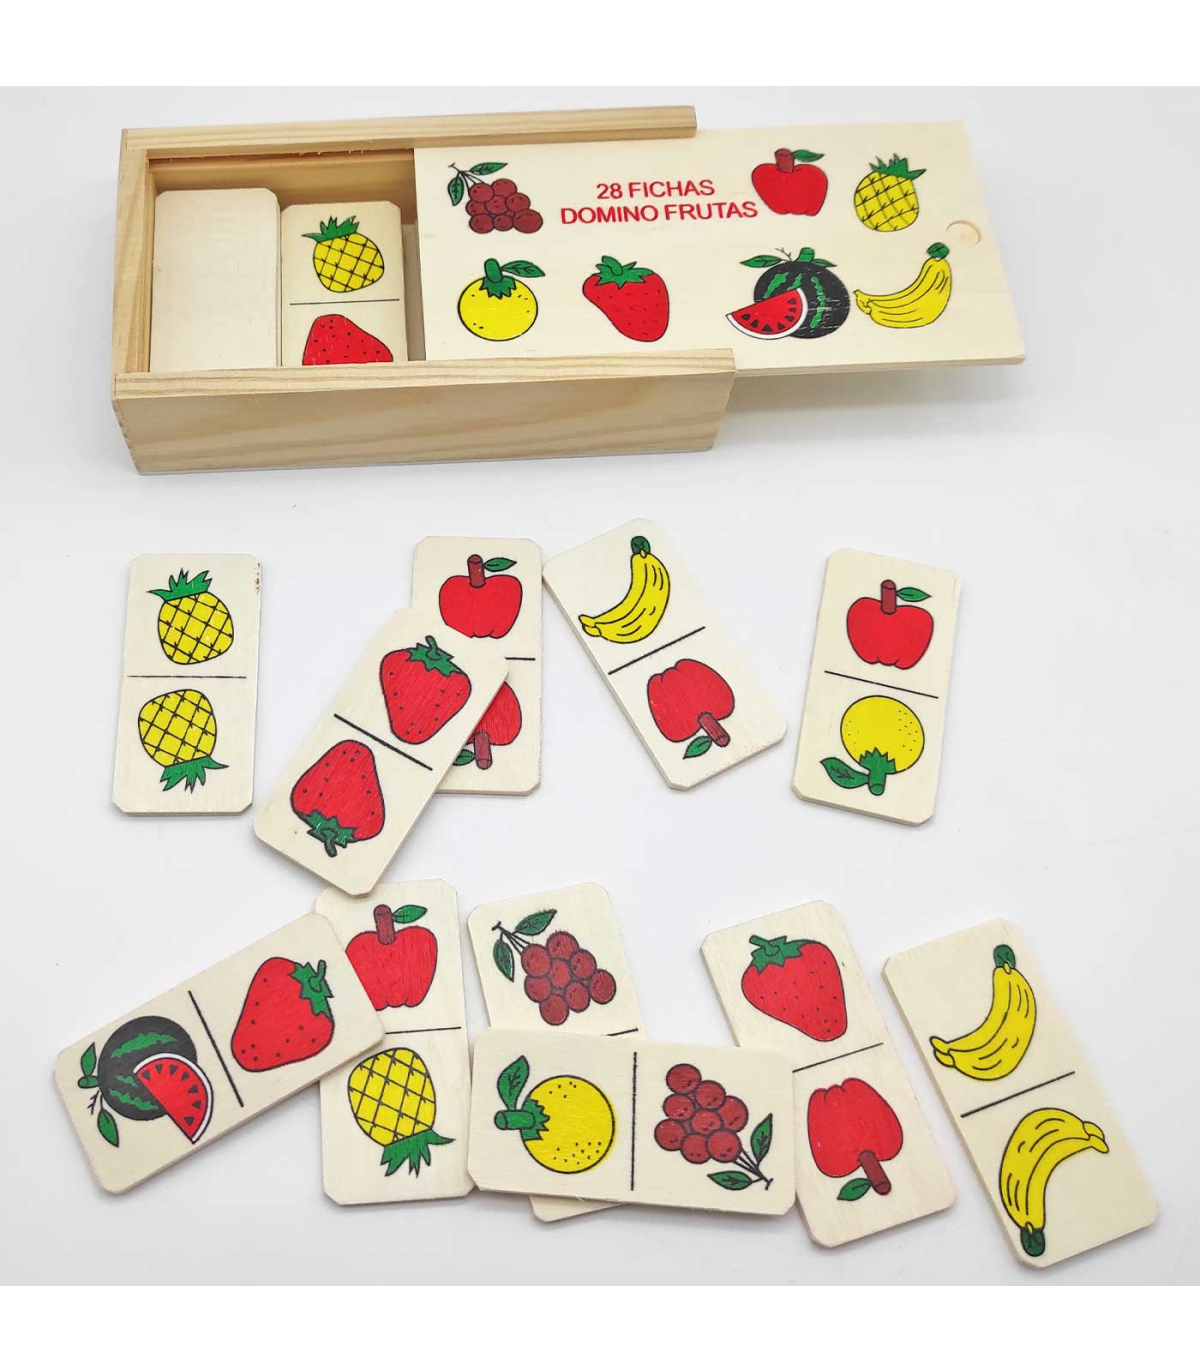 Dominó Infantil Frutas x28 Pzs. en Caja de Cartón - Didacticos Pinocho